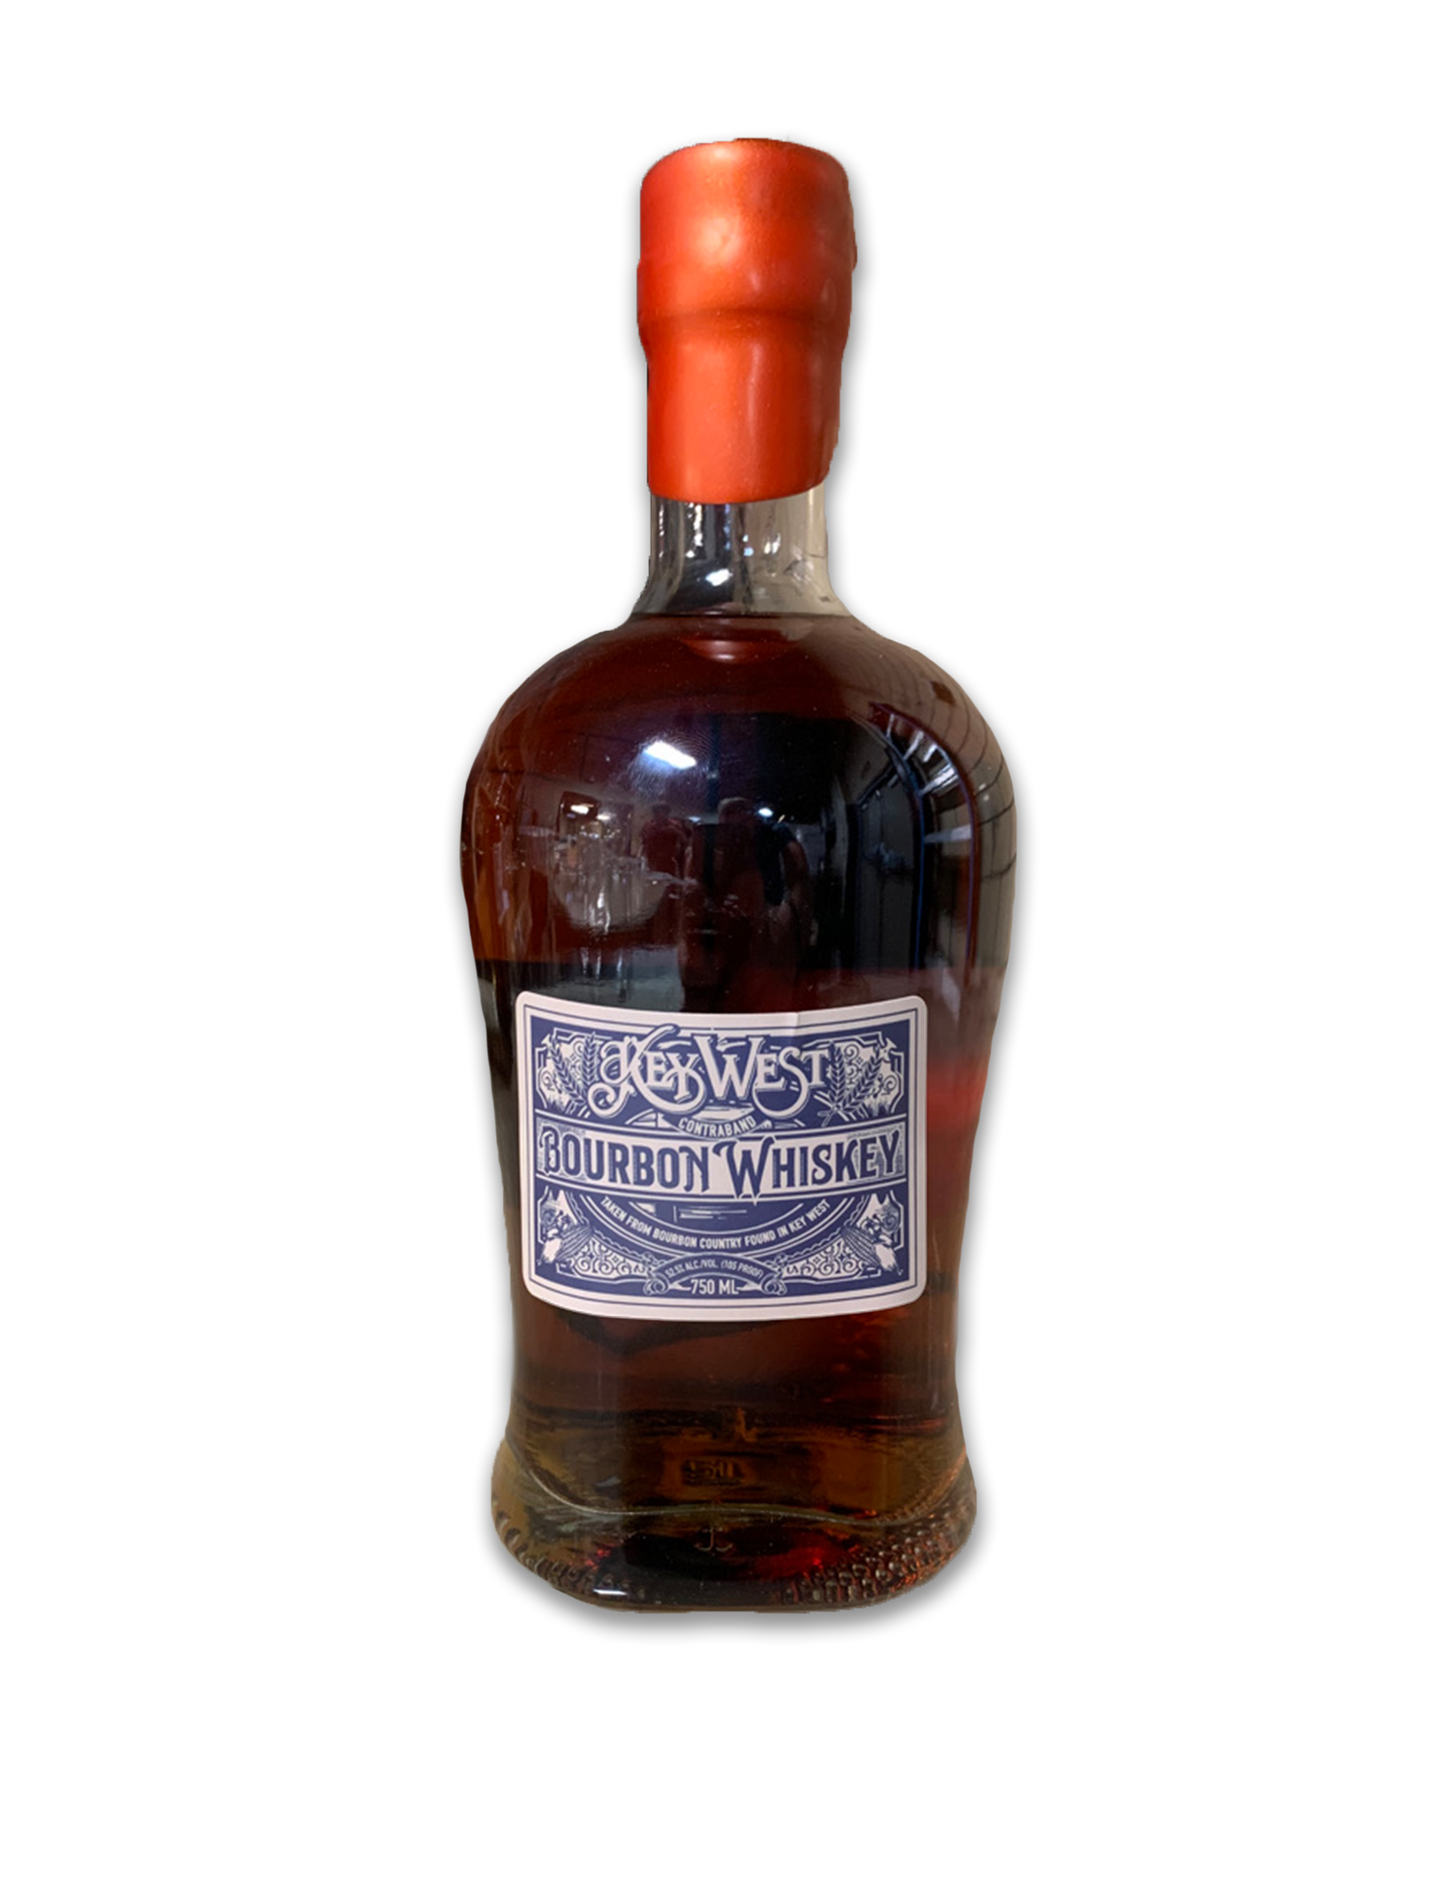 Key West Bourbon Whiskey Red Bottle